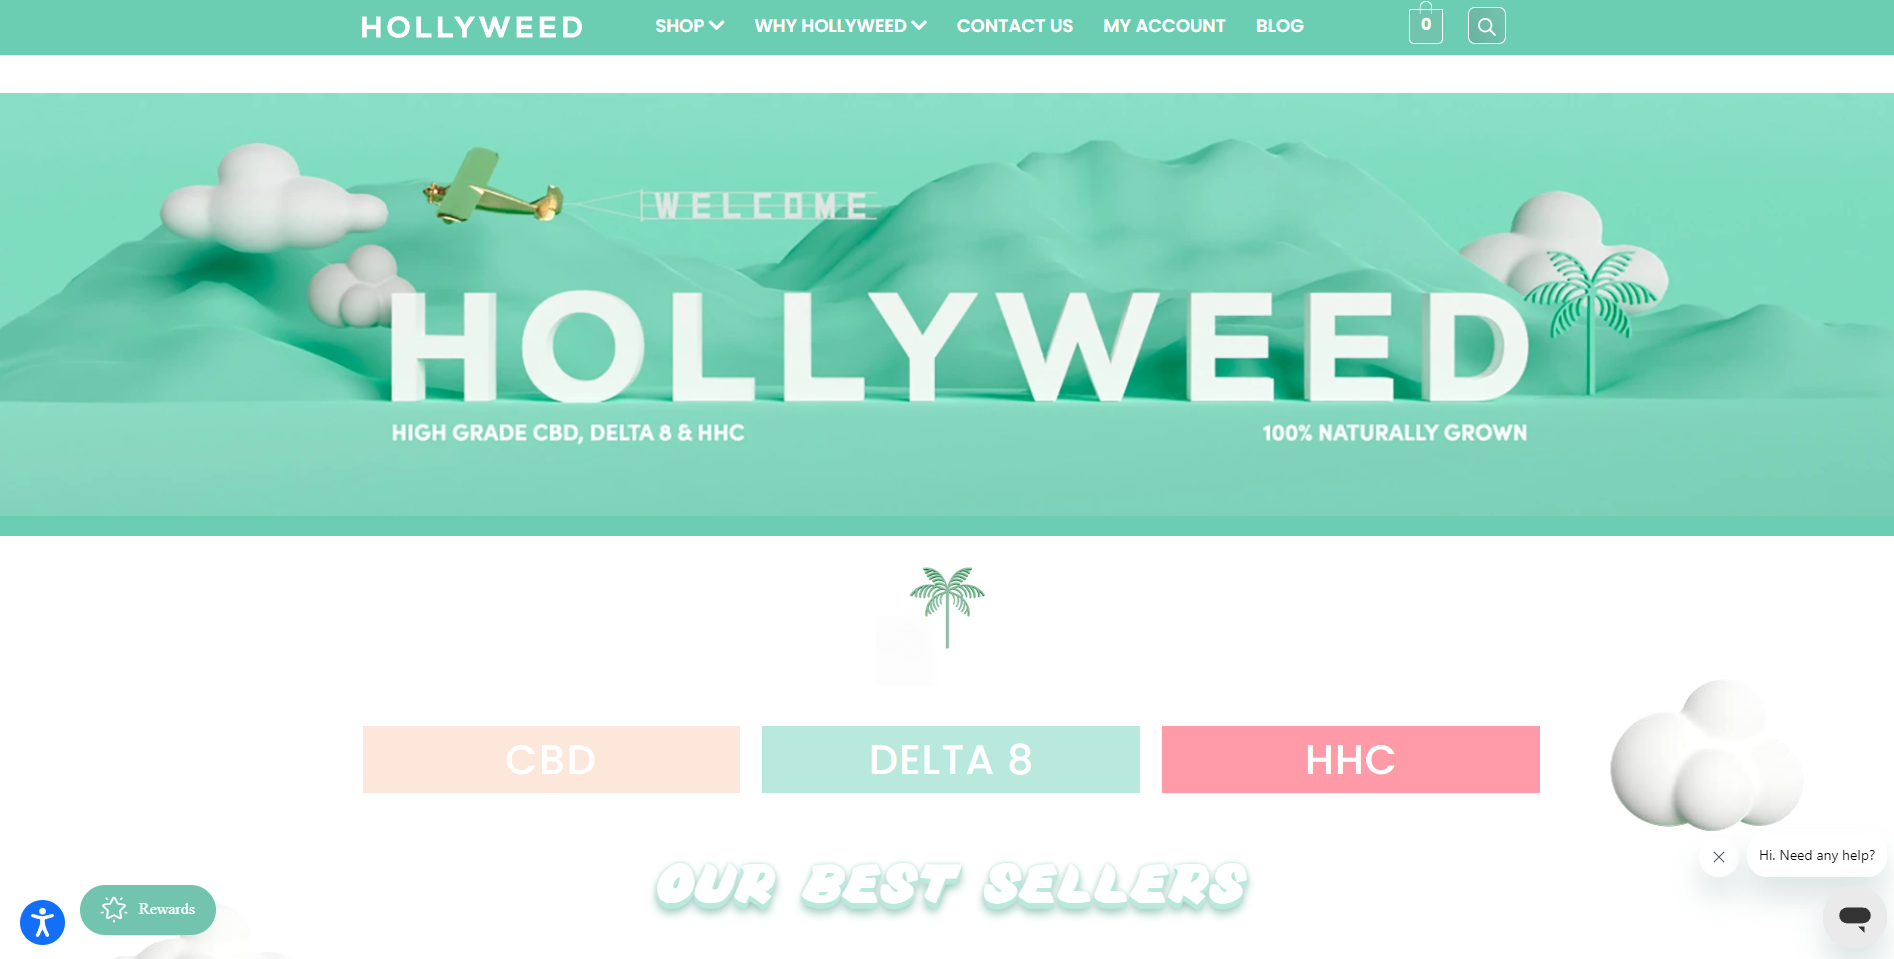 Hollyweed CBD Affiliate Program Homepage Image